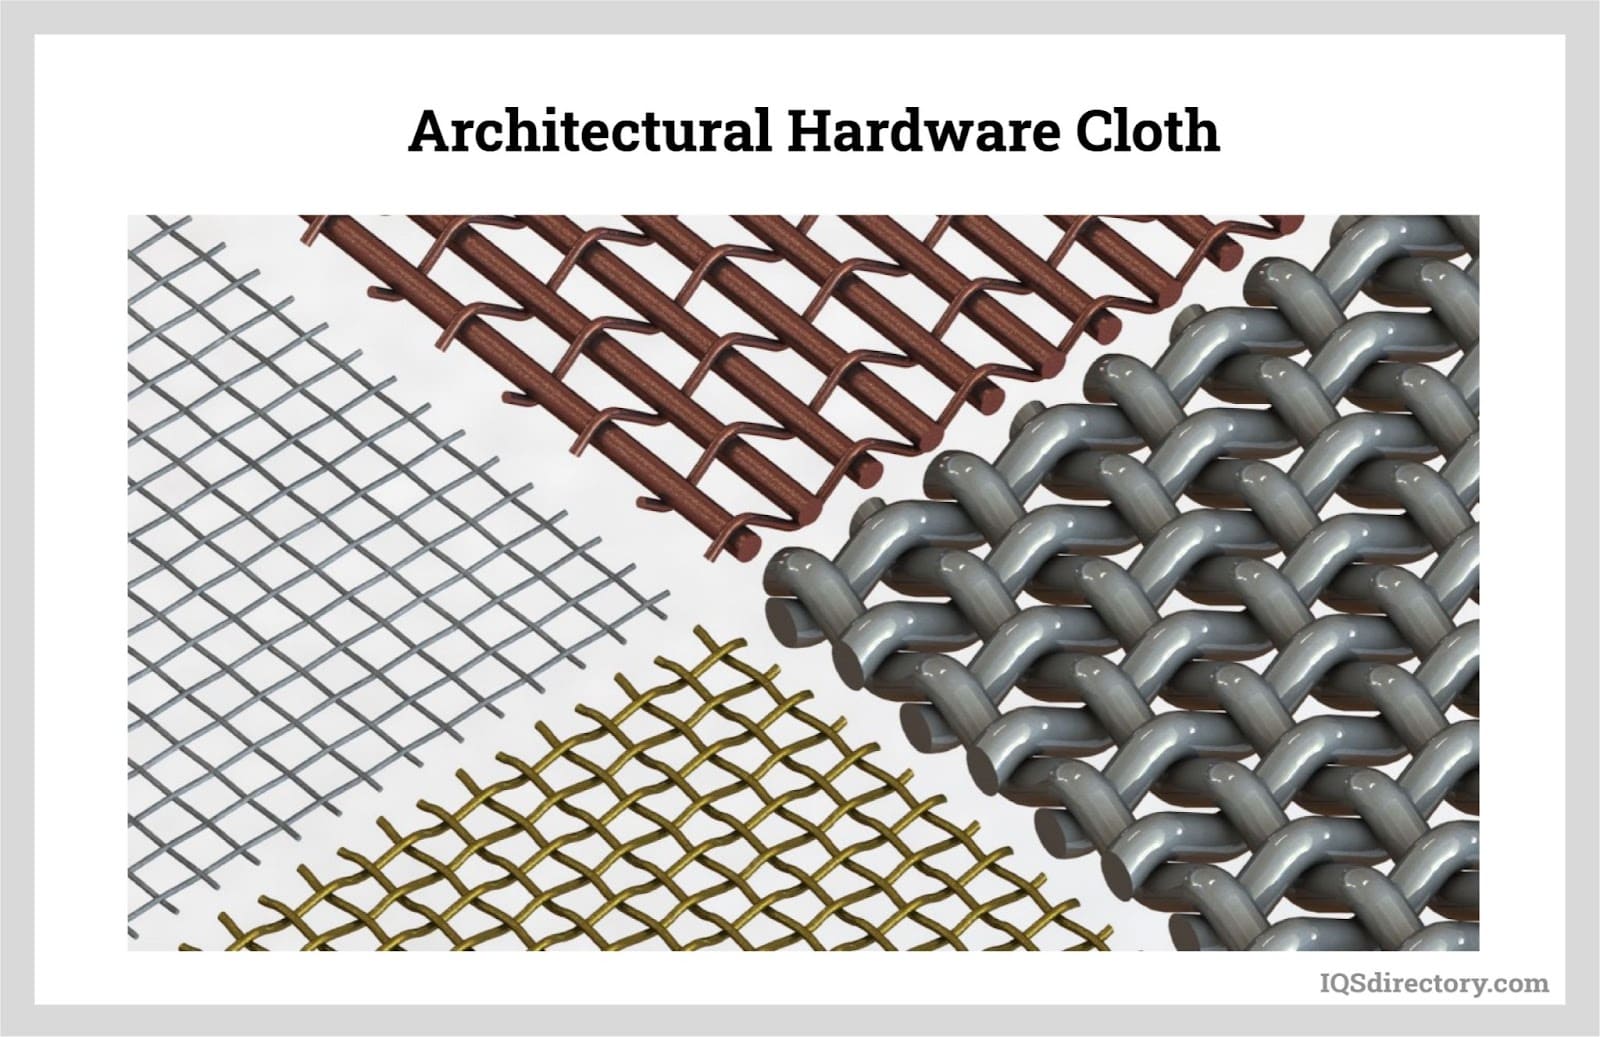 Architectural Hardware Cloth